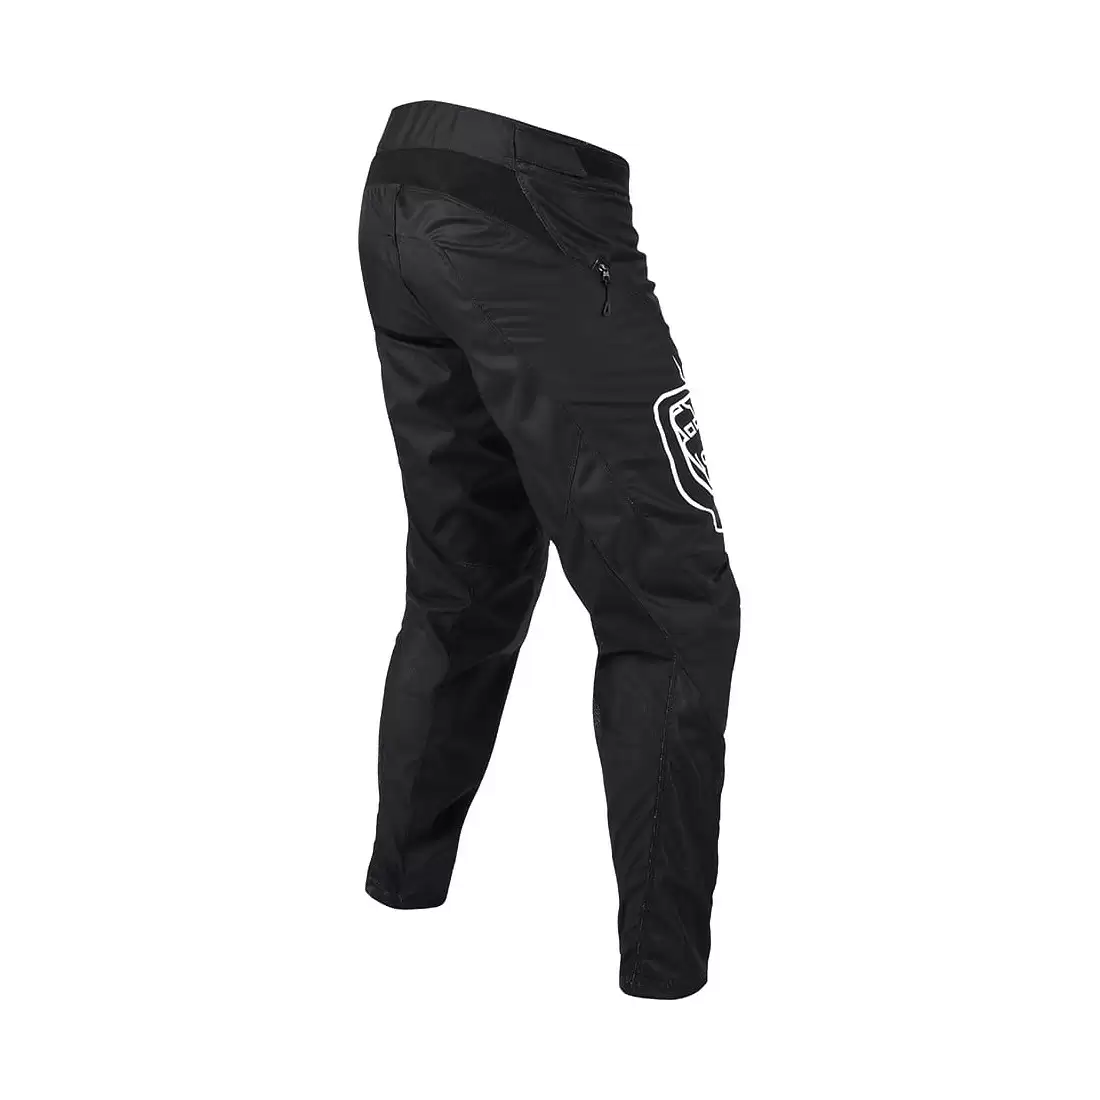 Pantalones MTB DH/Enduro Sprint Negro Talla M #1